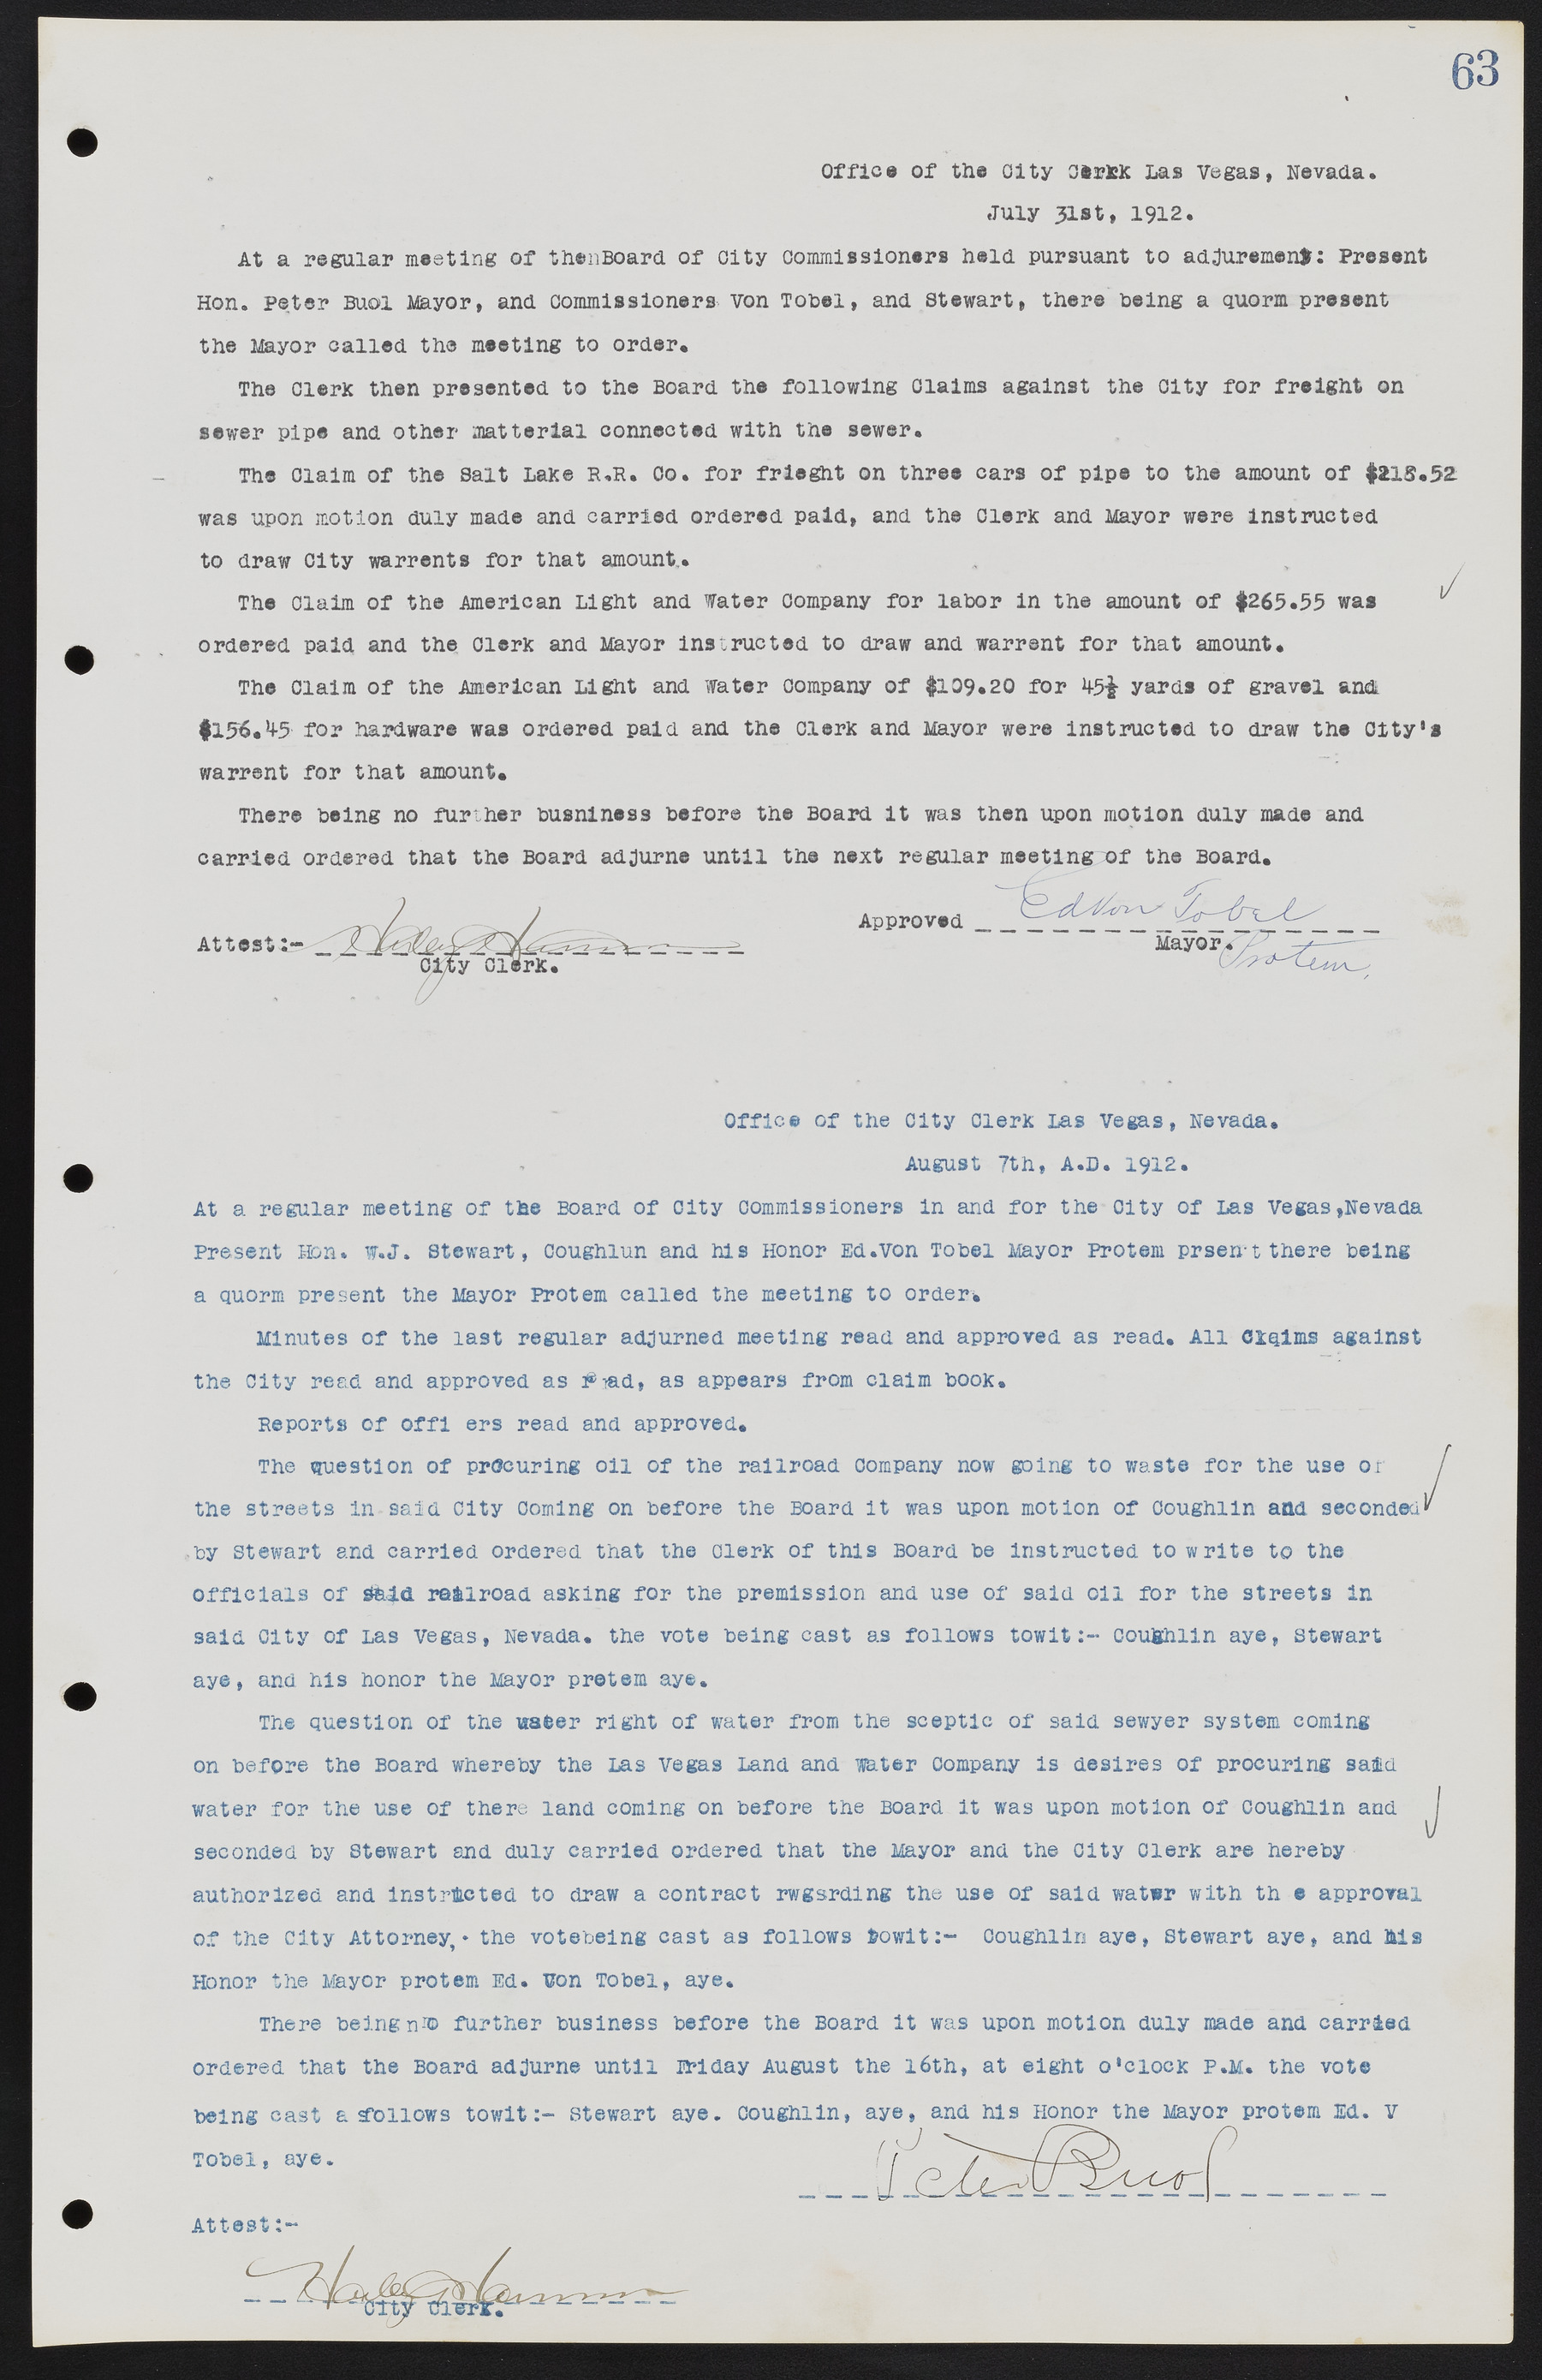 Las Vegas City Commission Minutes, June 22, 1911 to February 7, 1922, lvc000001-77